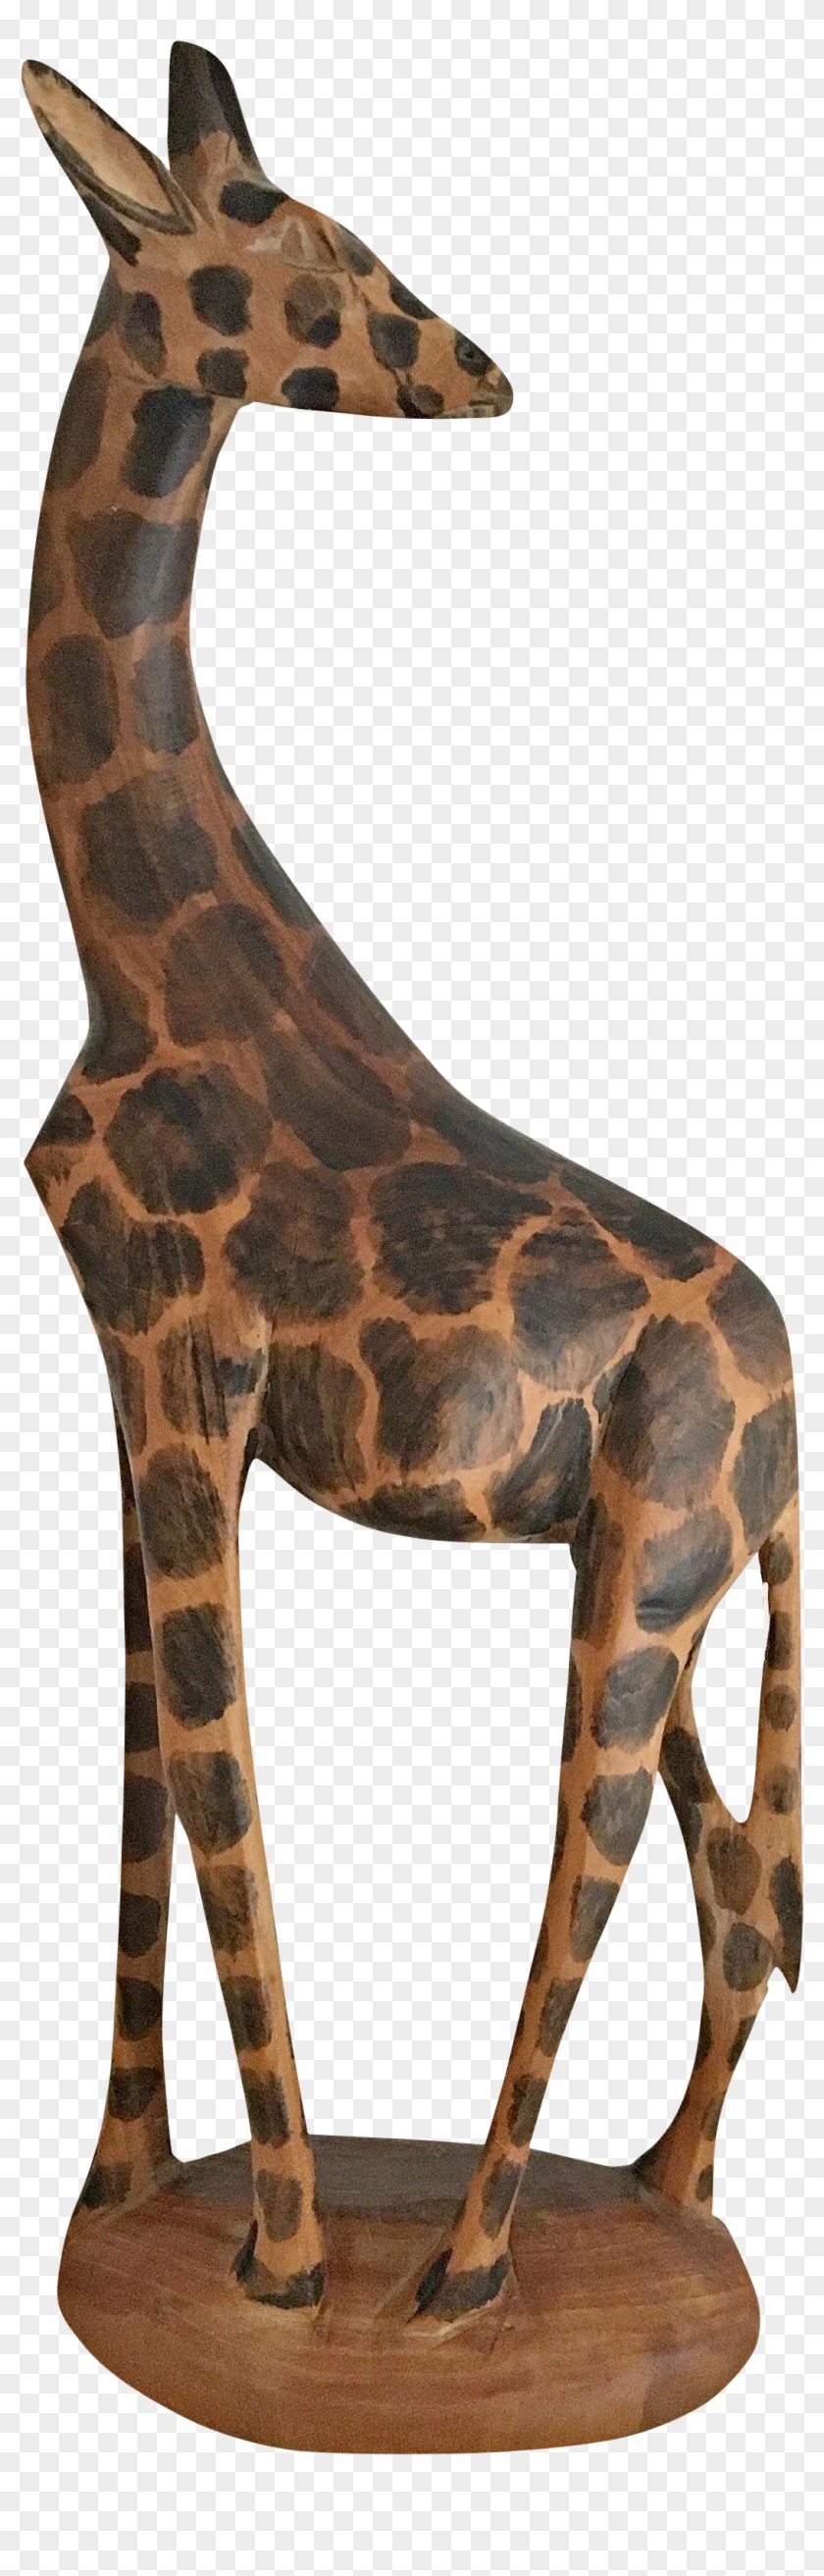 Wooden African Giraffe Figurine On Chairish - Giraffe #780020